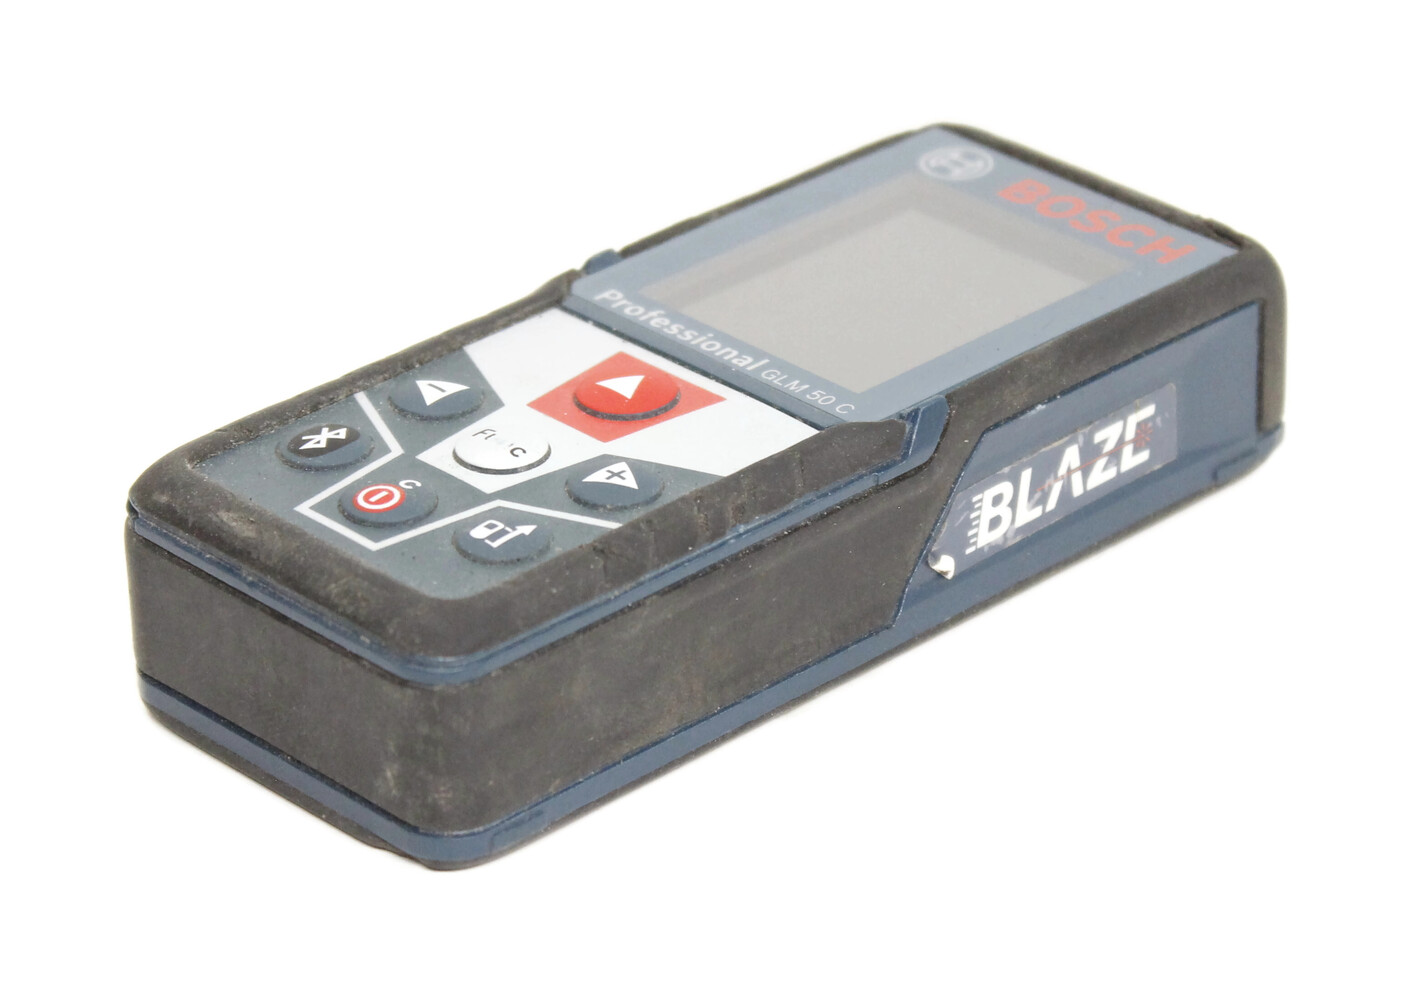 Bosch Blaze GLM 50 C Bluetooth Laser Distance Measurer Contracting Building Tool